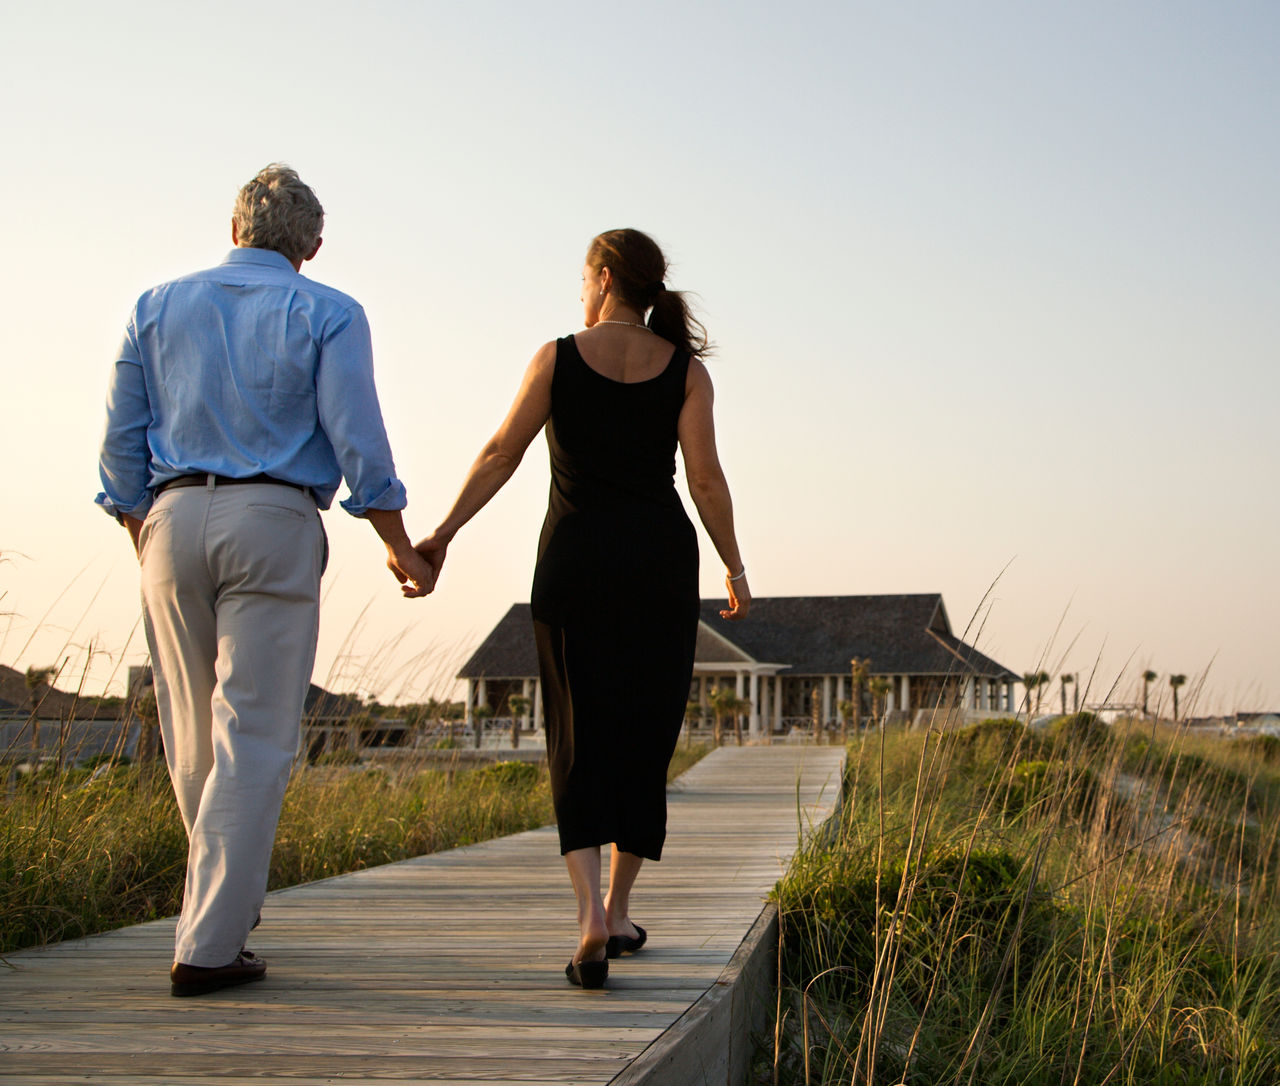 Couple walk hand in hand on a boardwalk towards a beach pavilion. Horizontal shot.